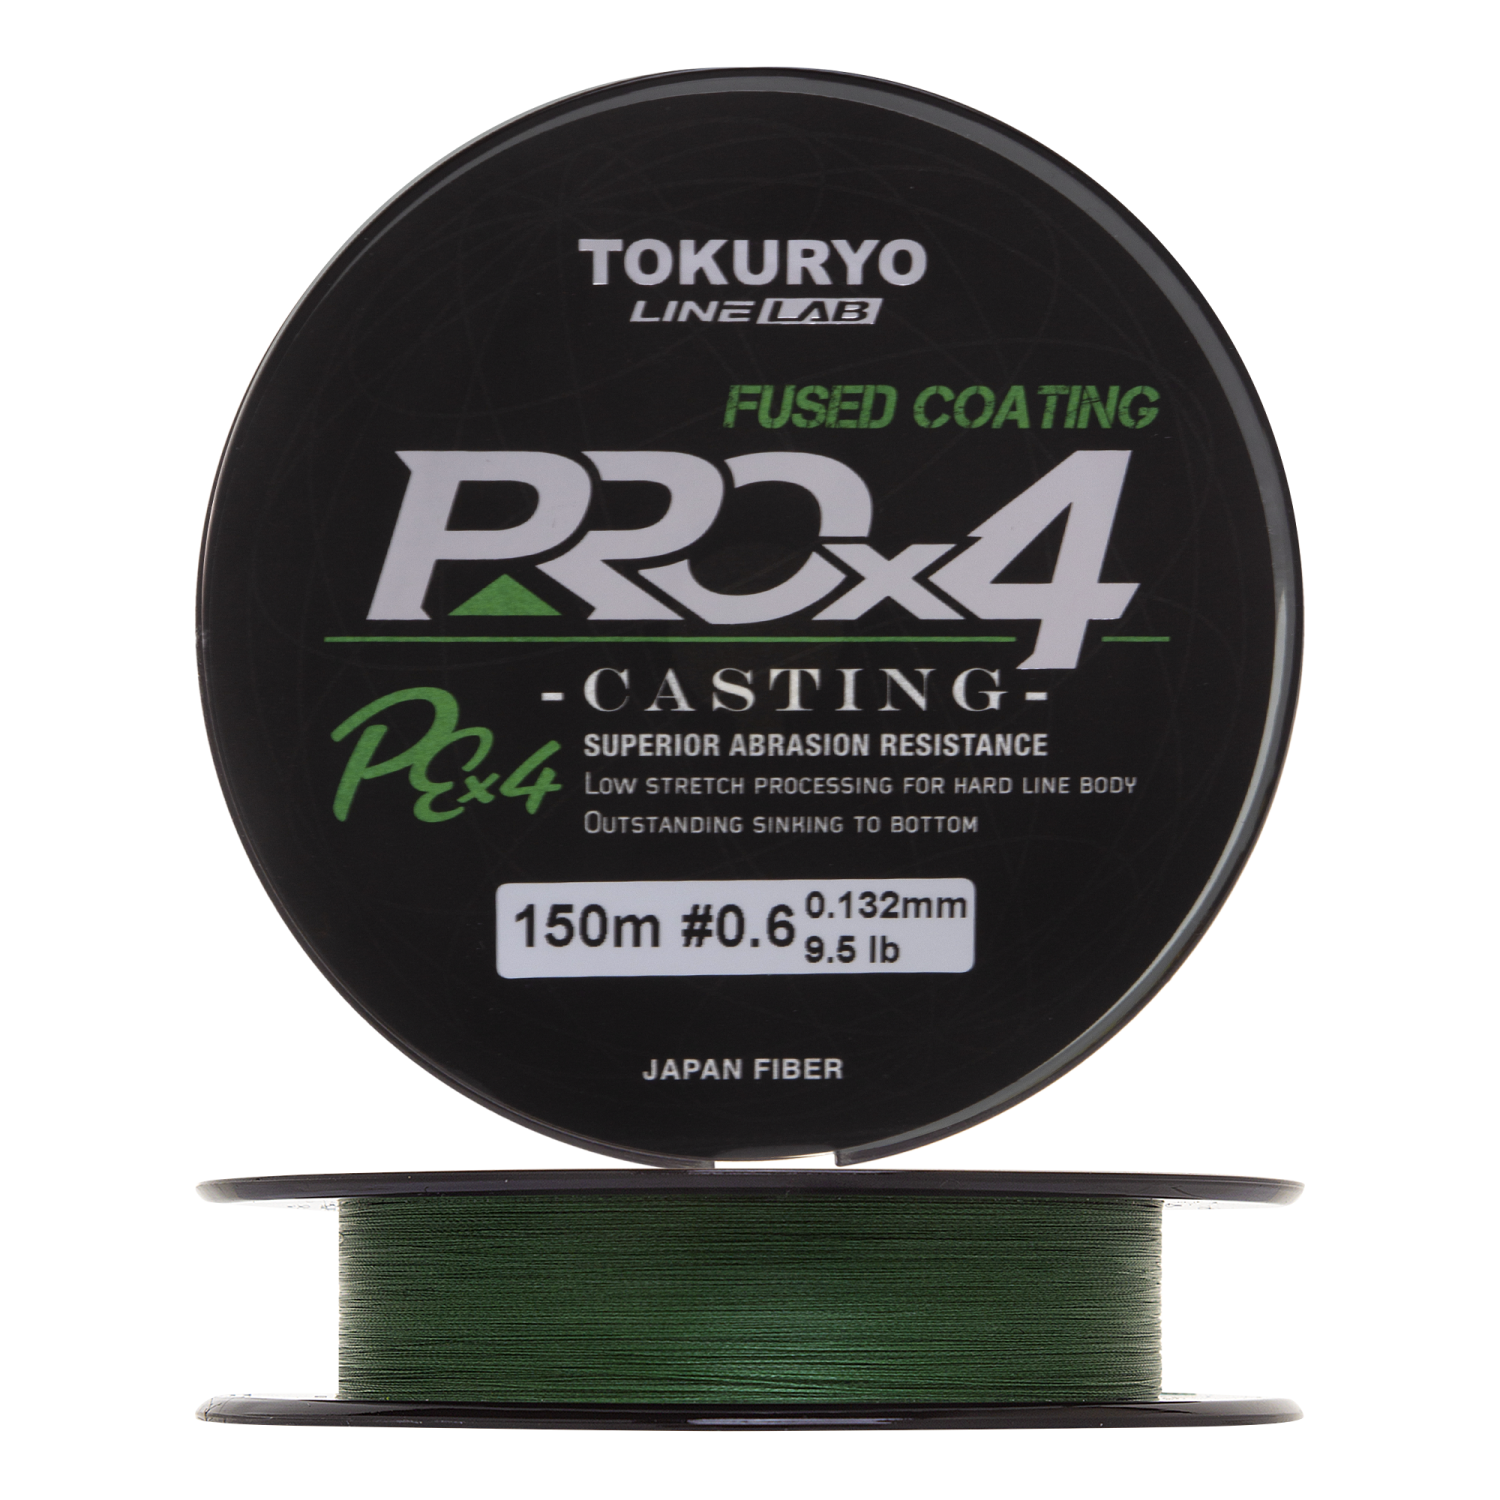 шнур tokuryo pro pe x4 casting 150м dark green 1 0 0 171мм 16 1lb Шнур плетеный Tokuryo Pro PE X4 #0,6 0,132мм 150м (dark green)